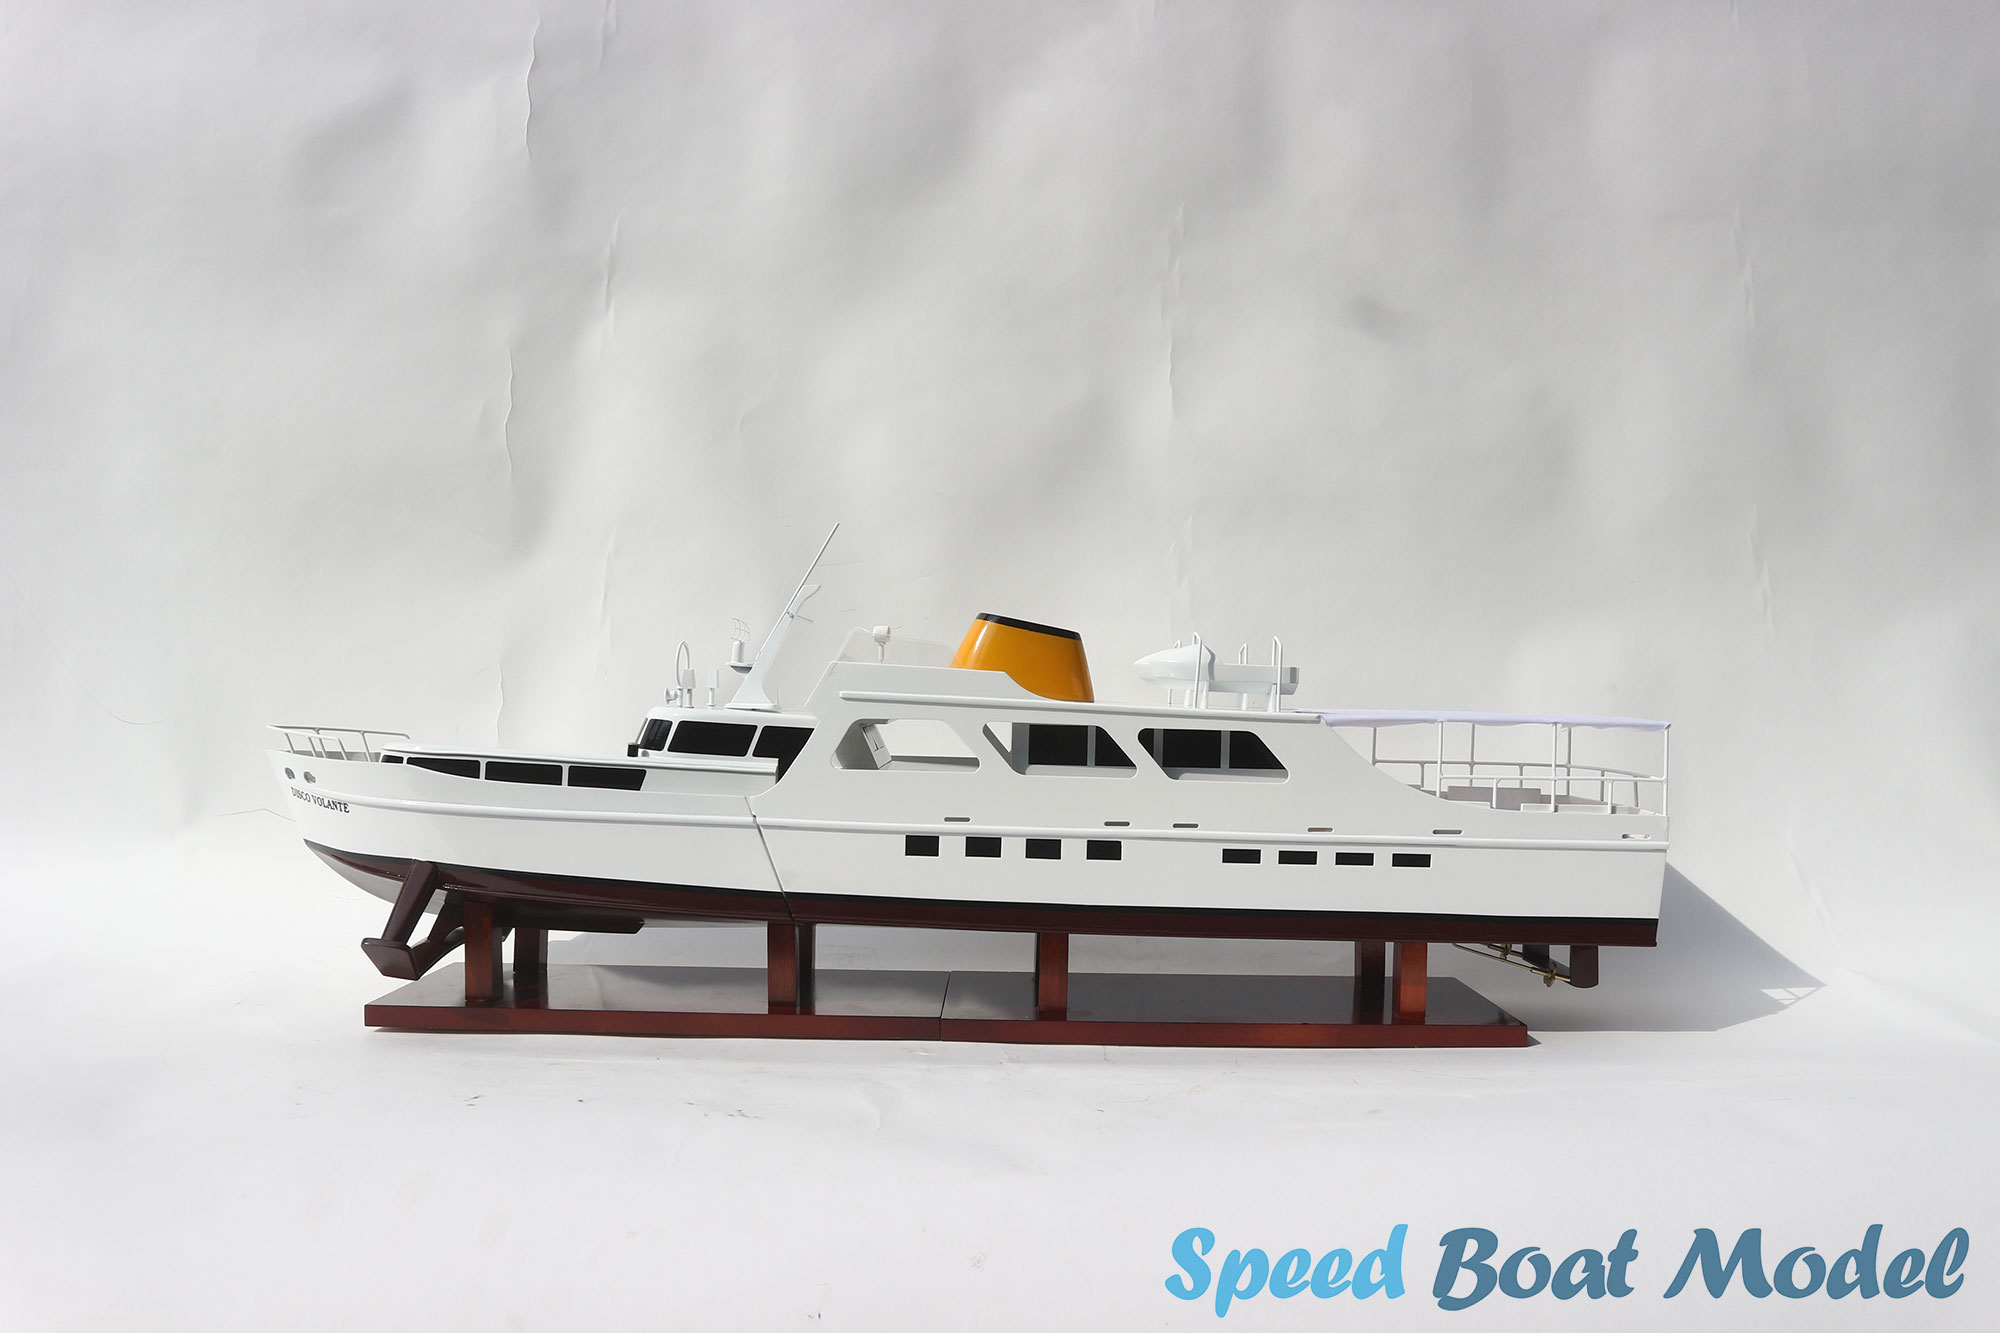 Disco Volante Modern Yacht Model 31.4